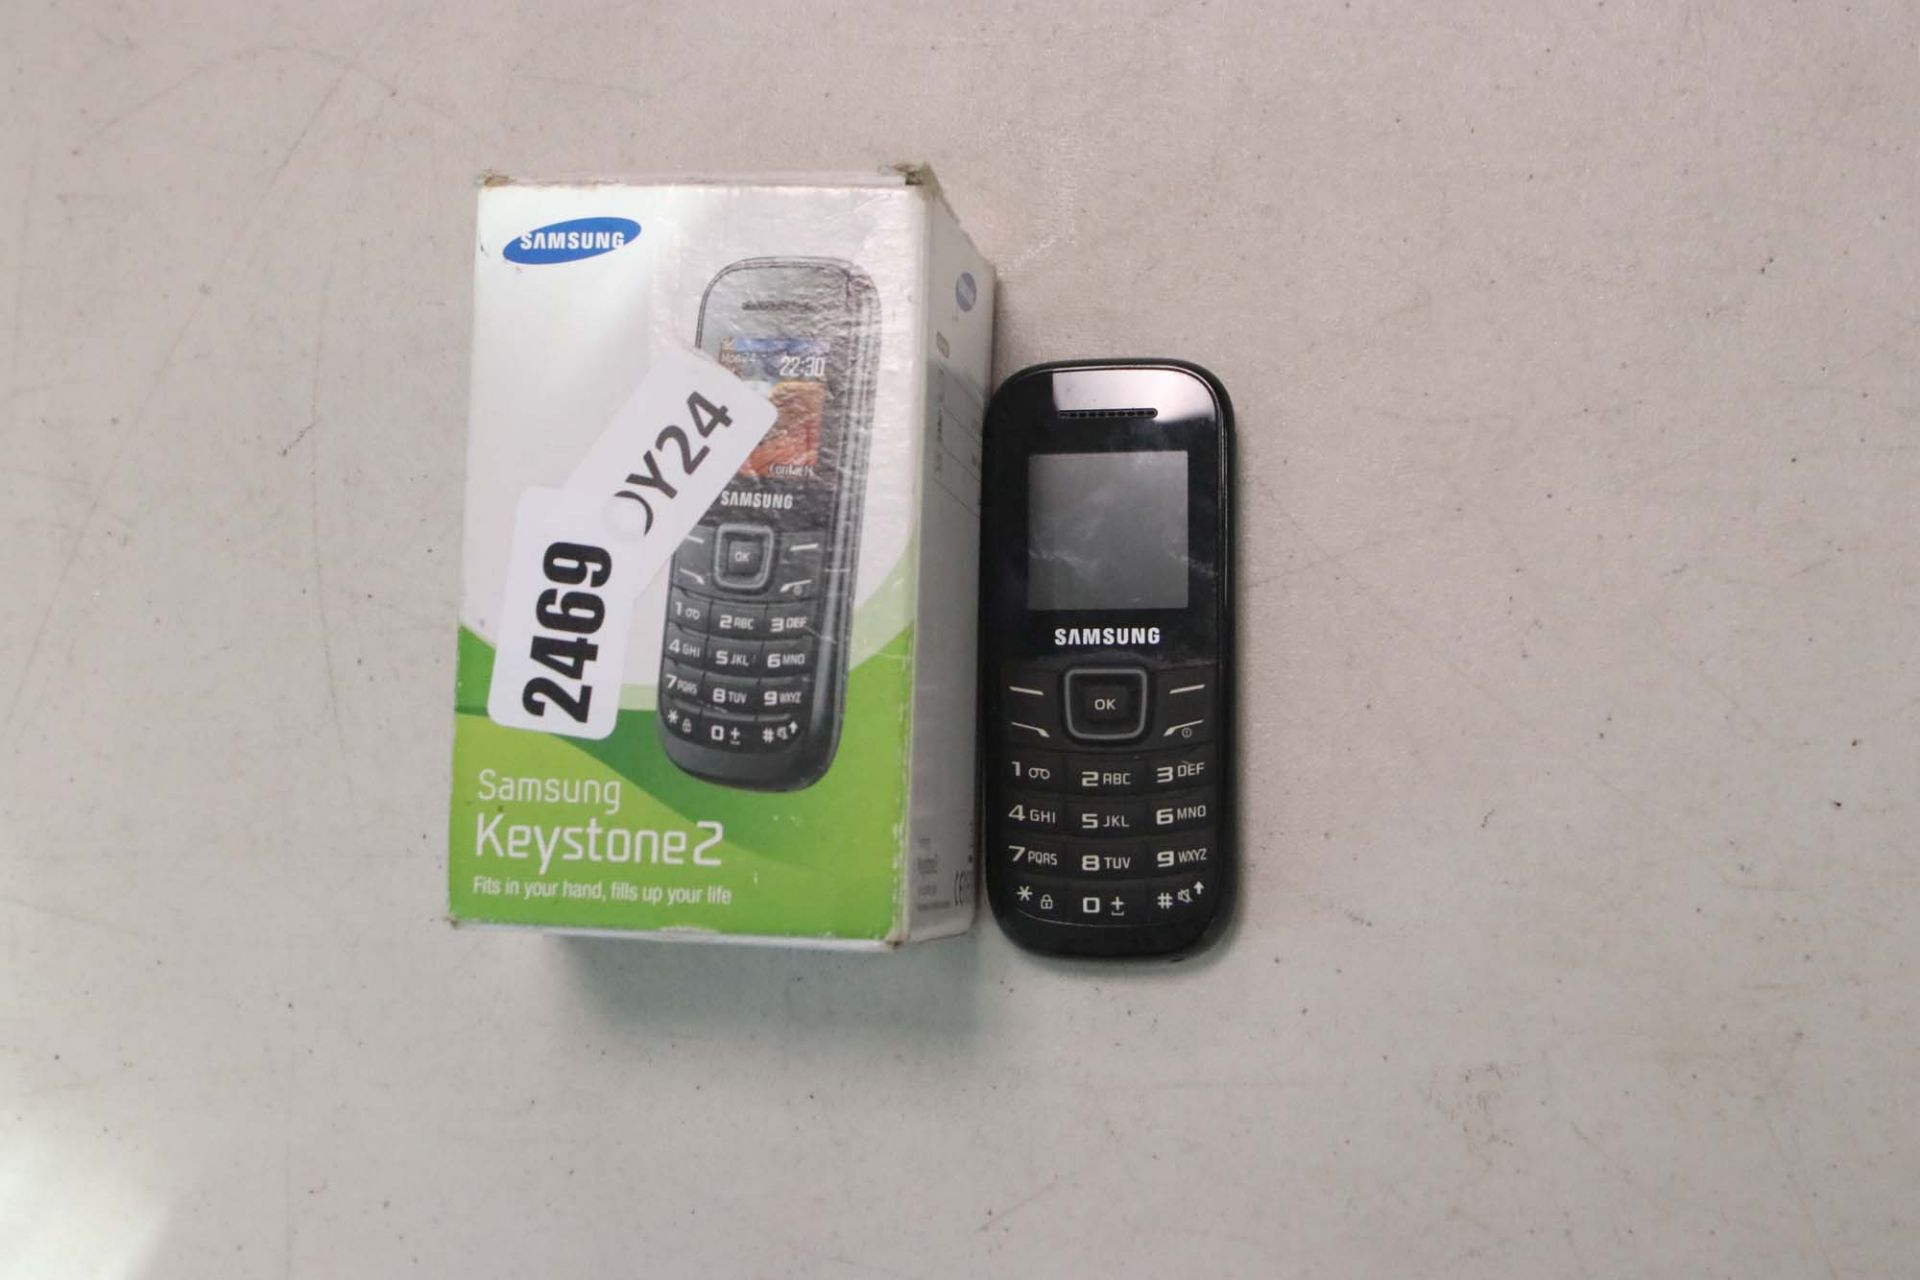 Samsung Keystone 2 mobile phone